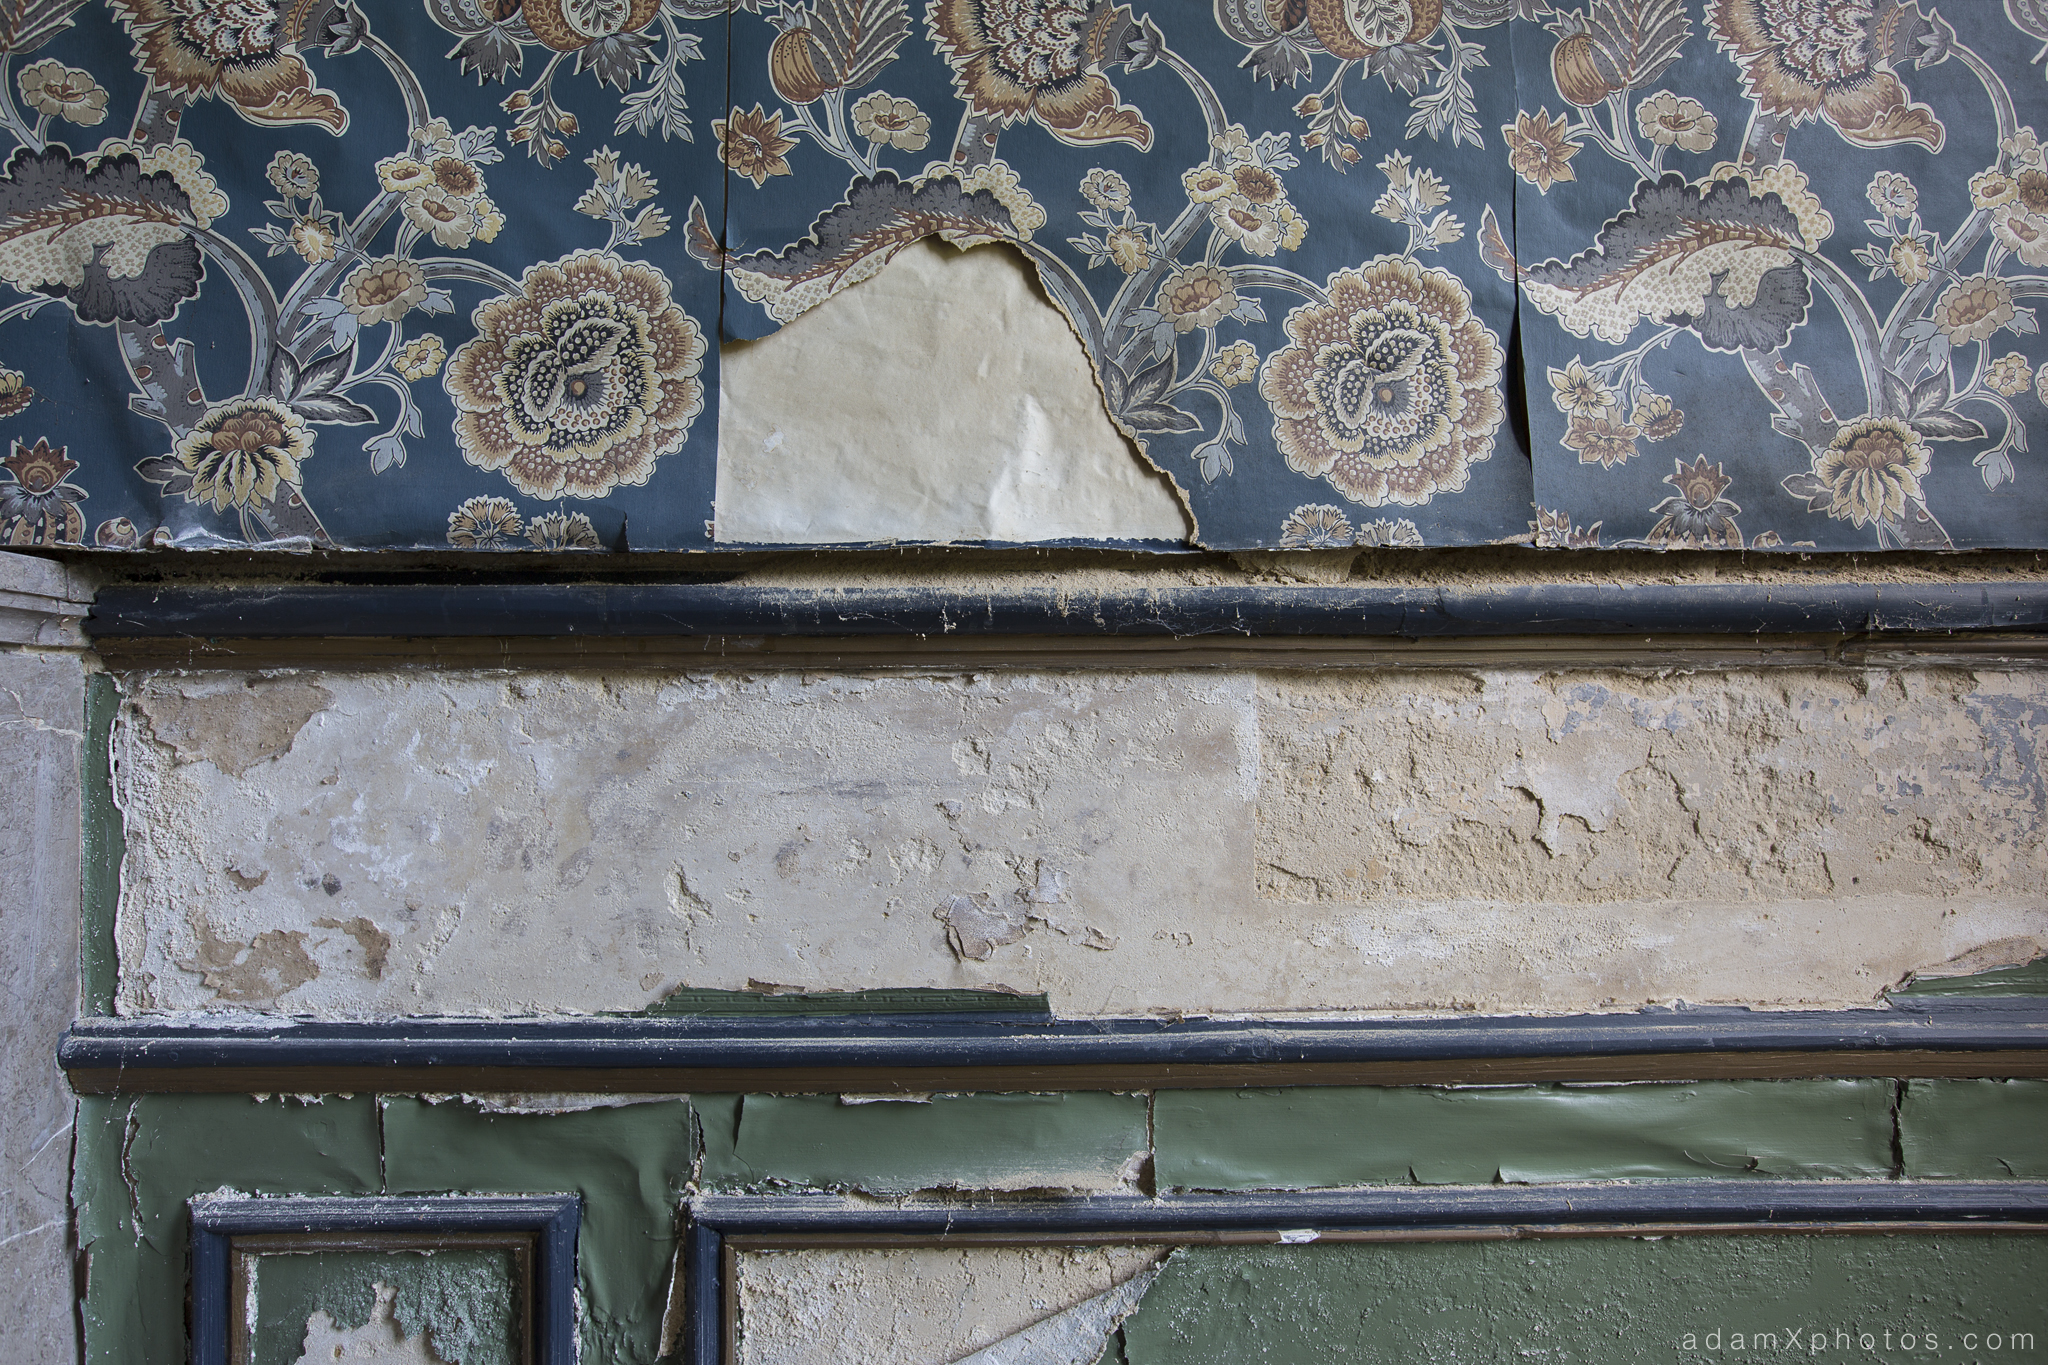 Adam X Chateau de la Chapelle urbex urban exploration belgium abandoned wallpaper decay detail